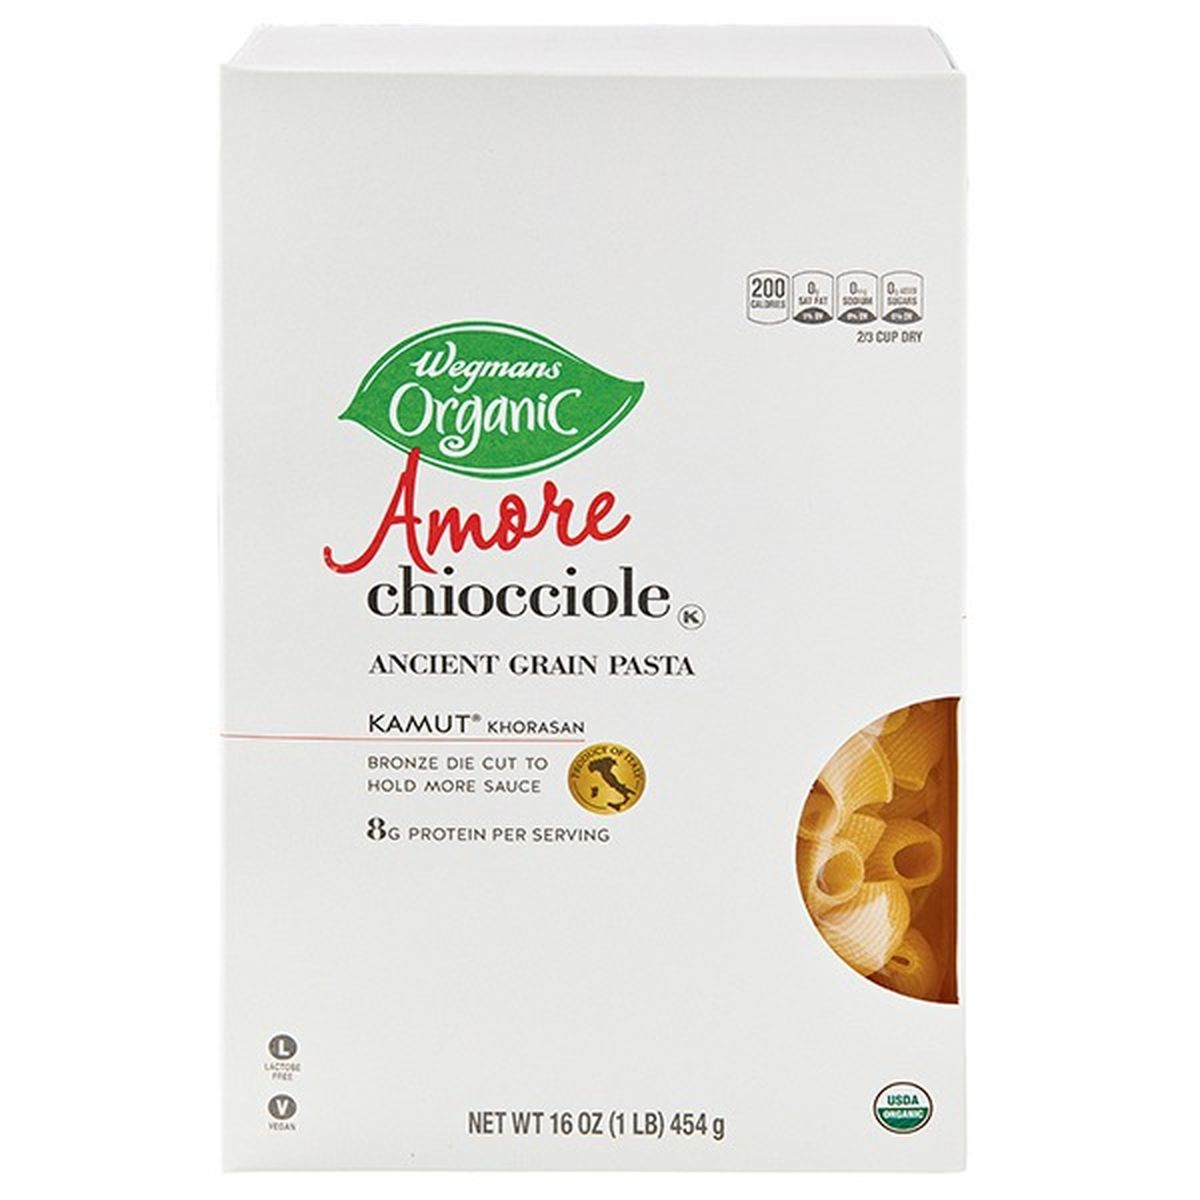 Calories in Wegmans Organic Amore Chiocciole, Ancient Grain Pasta, KAMUTs Khorasan